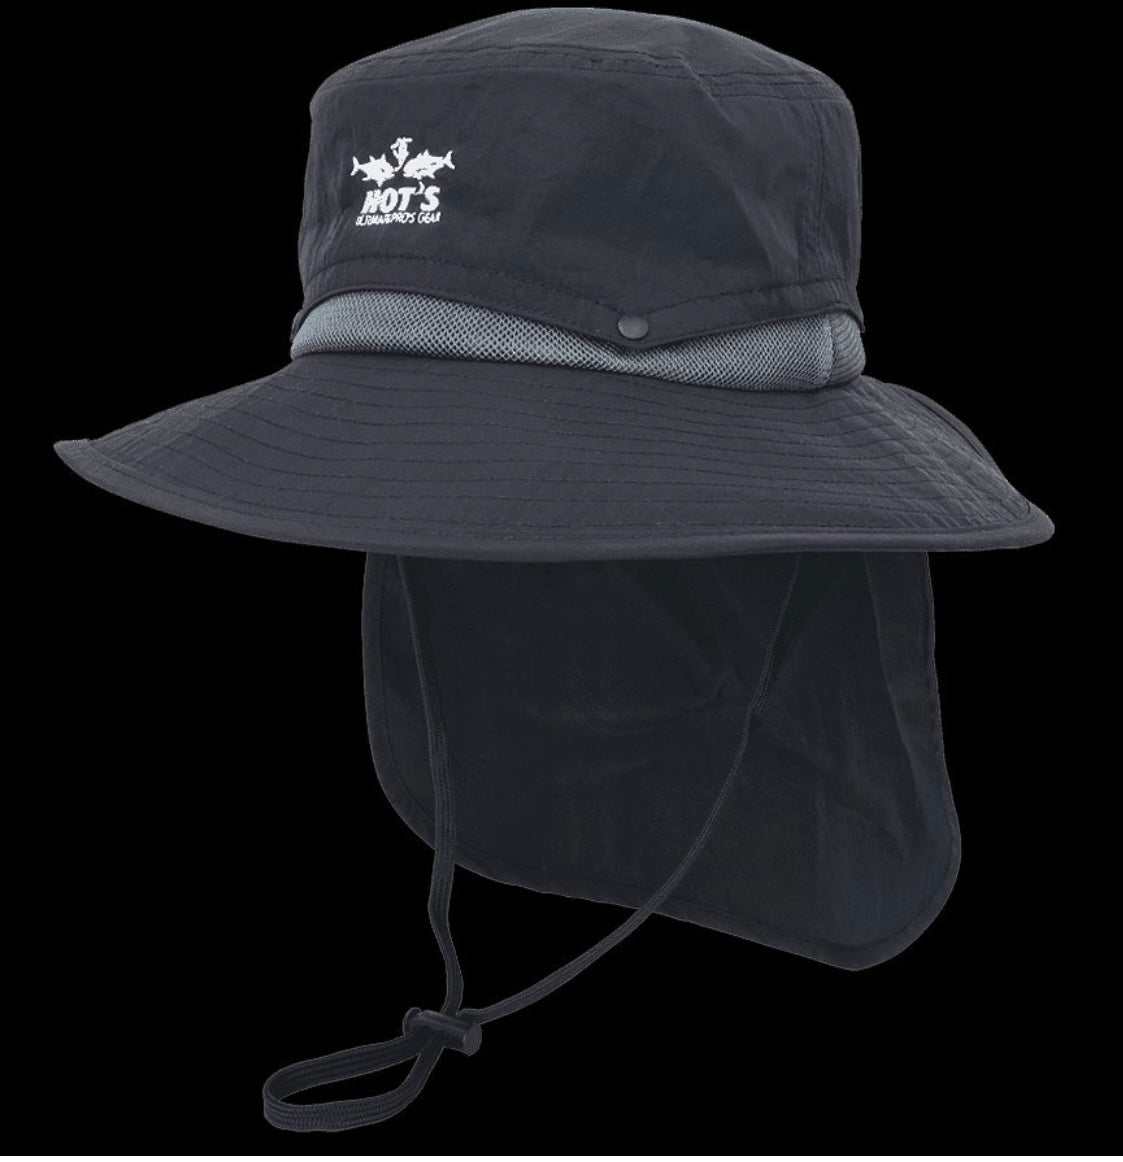 Hot's Sunshade Safari Hat – Anglers Outfitter - AOF